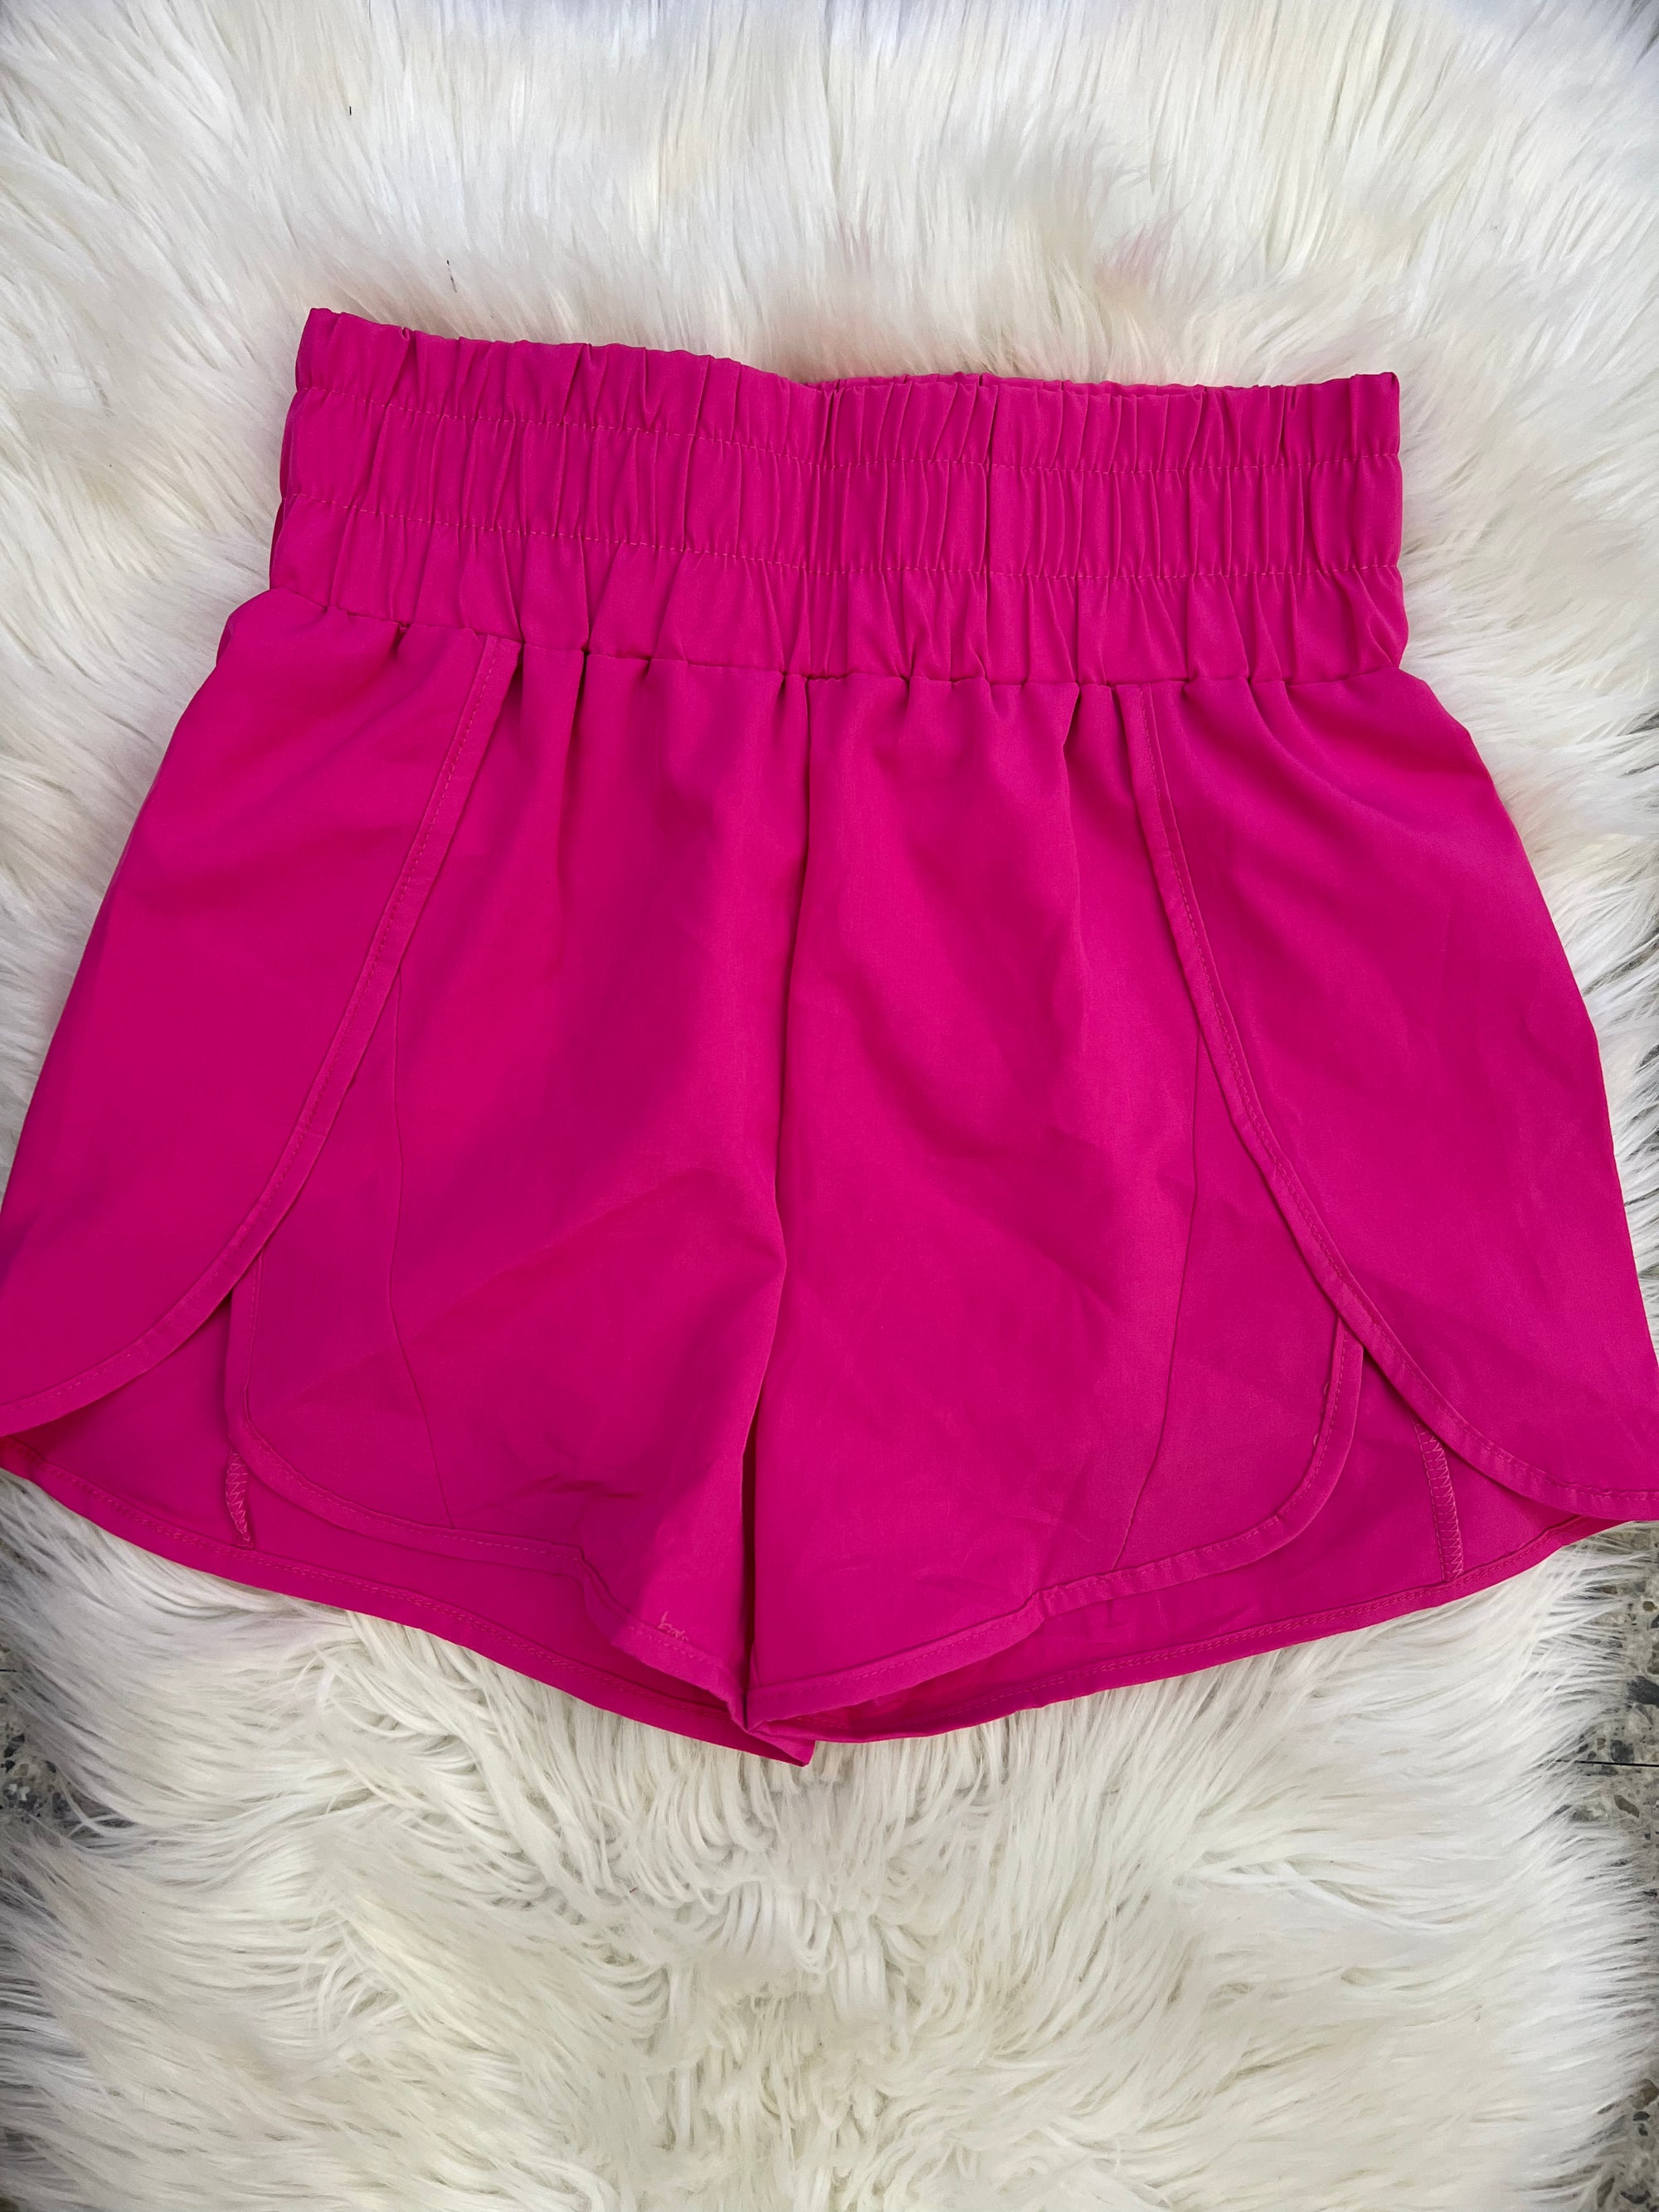 Pink Shorts- size small